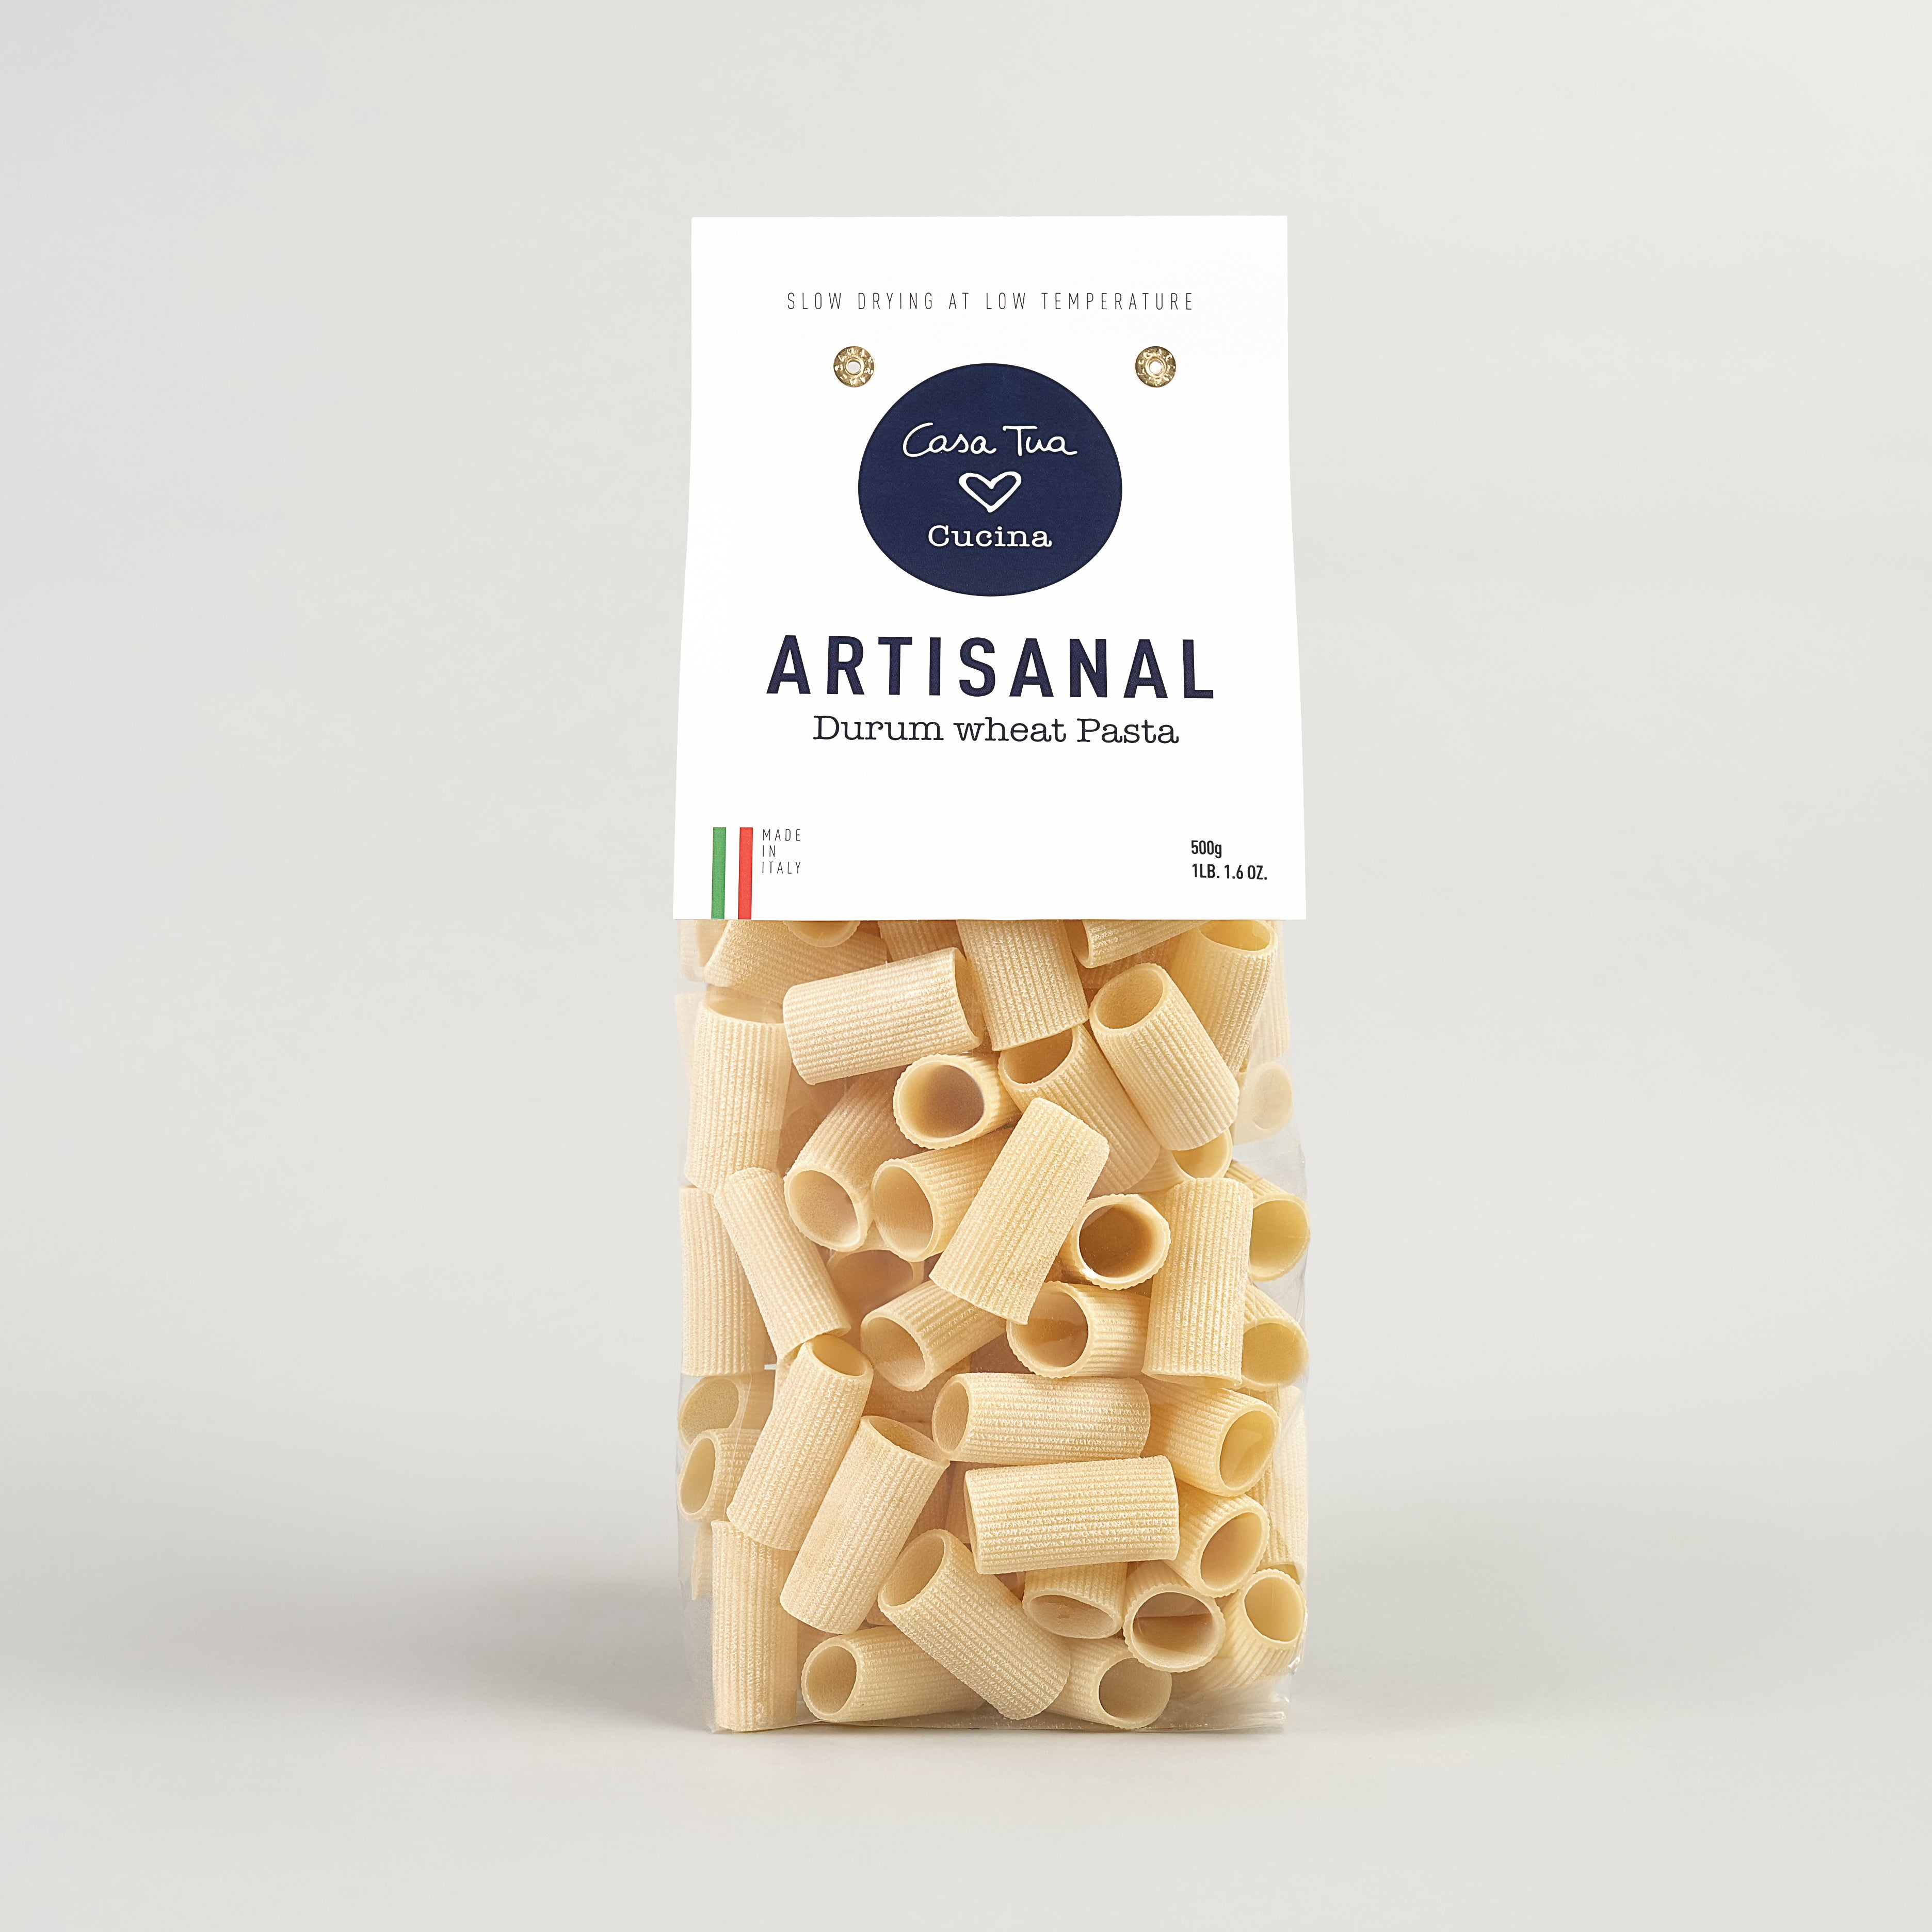 Artisanal Durum Wheat Pasta “Rigatoni” - 1lb.